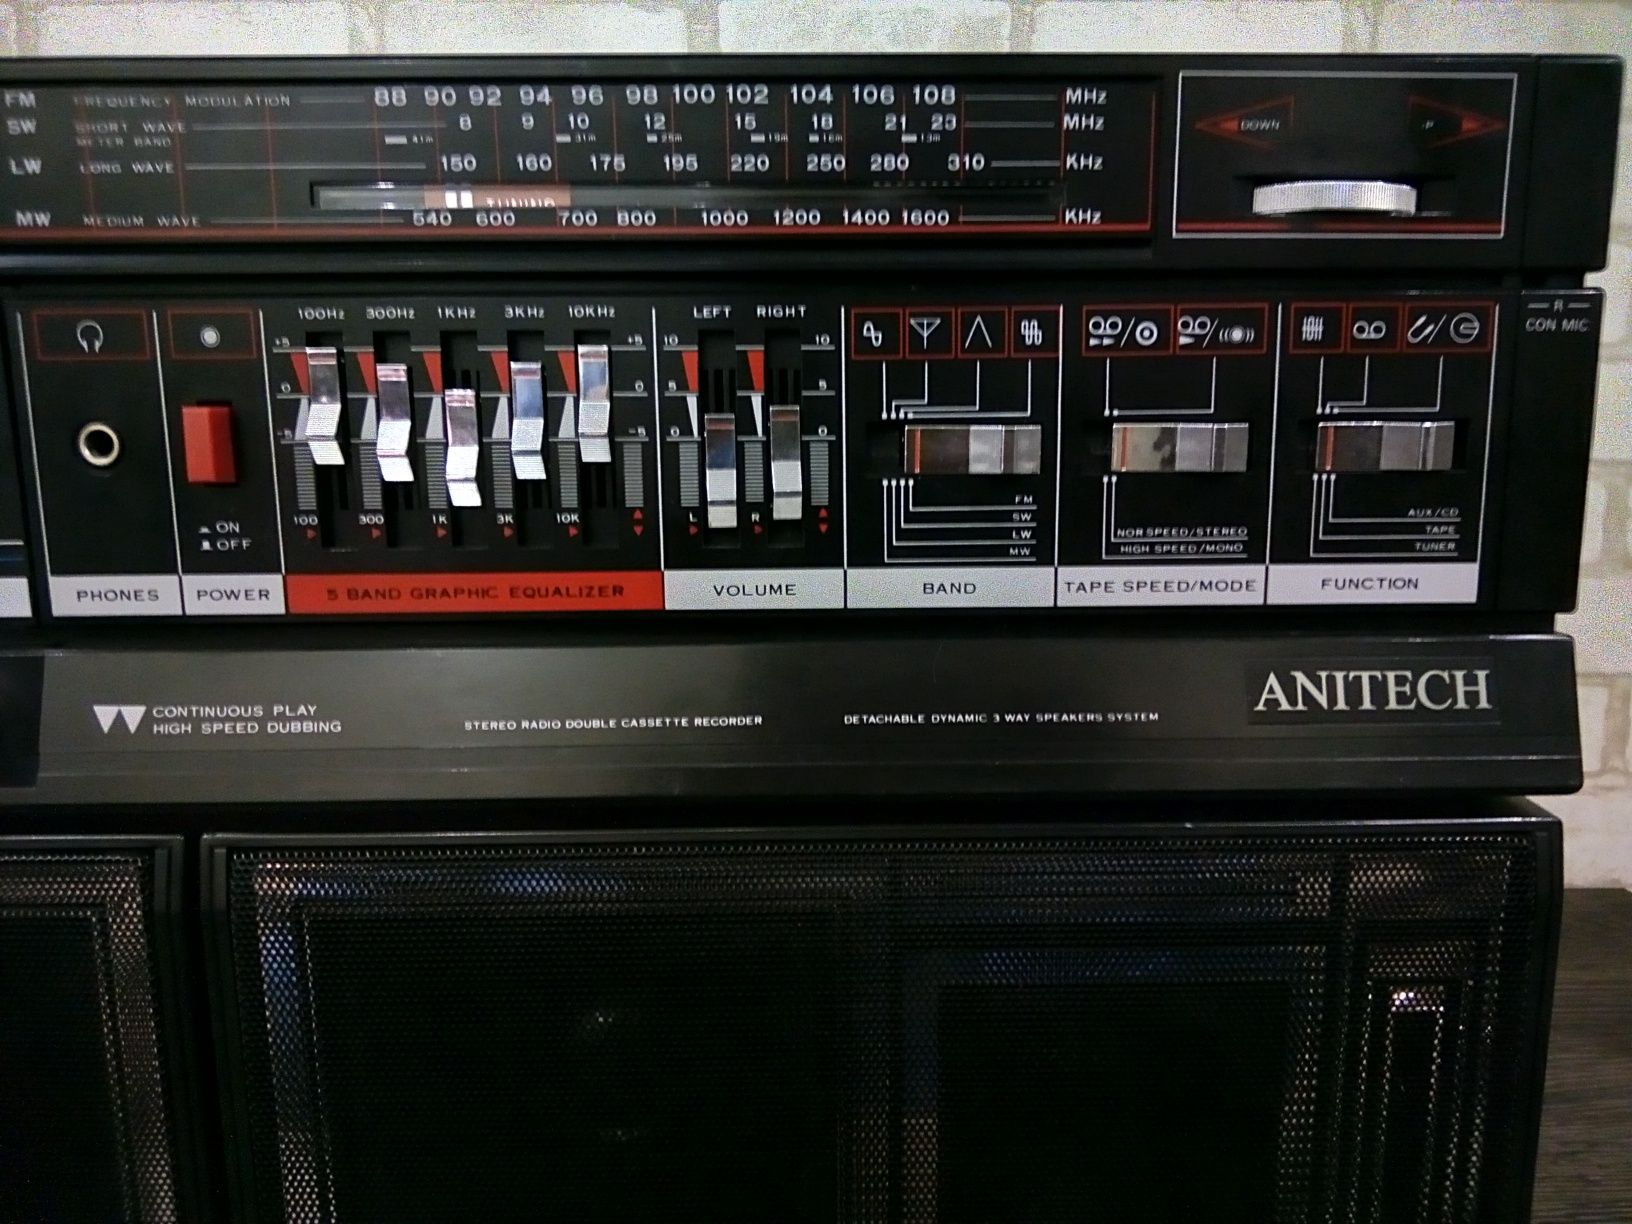 Anitech MC-1000 Stereo Radio Double Cassette Recorder 1987